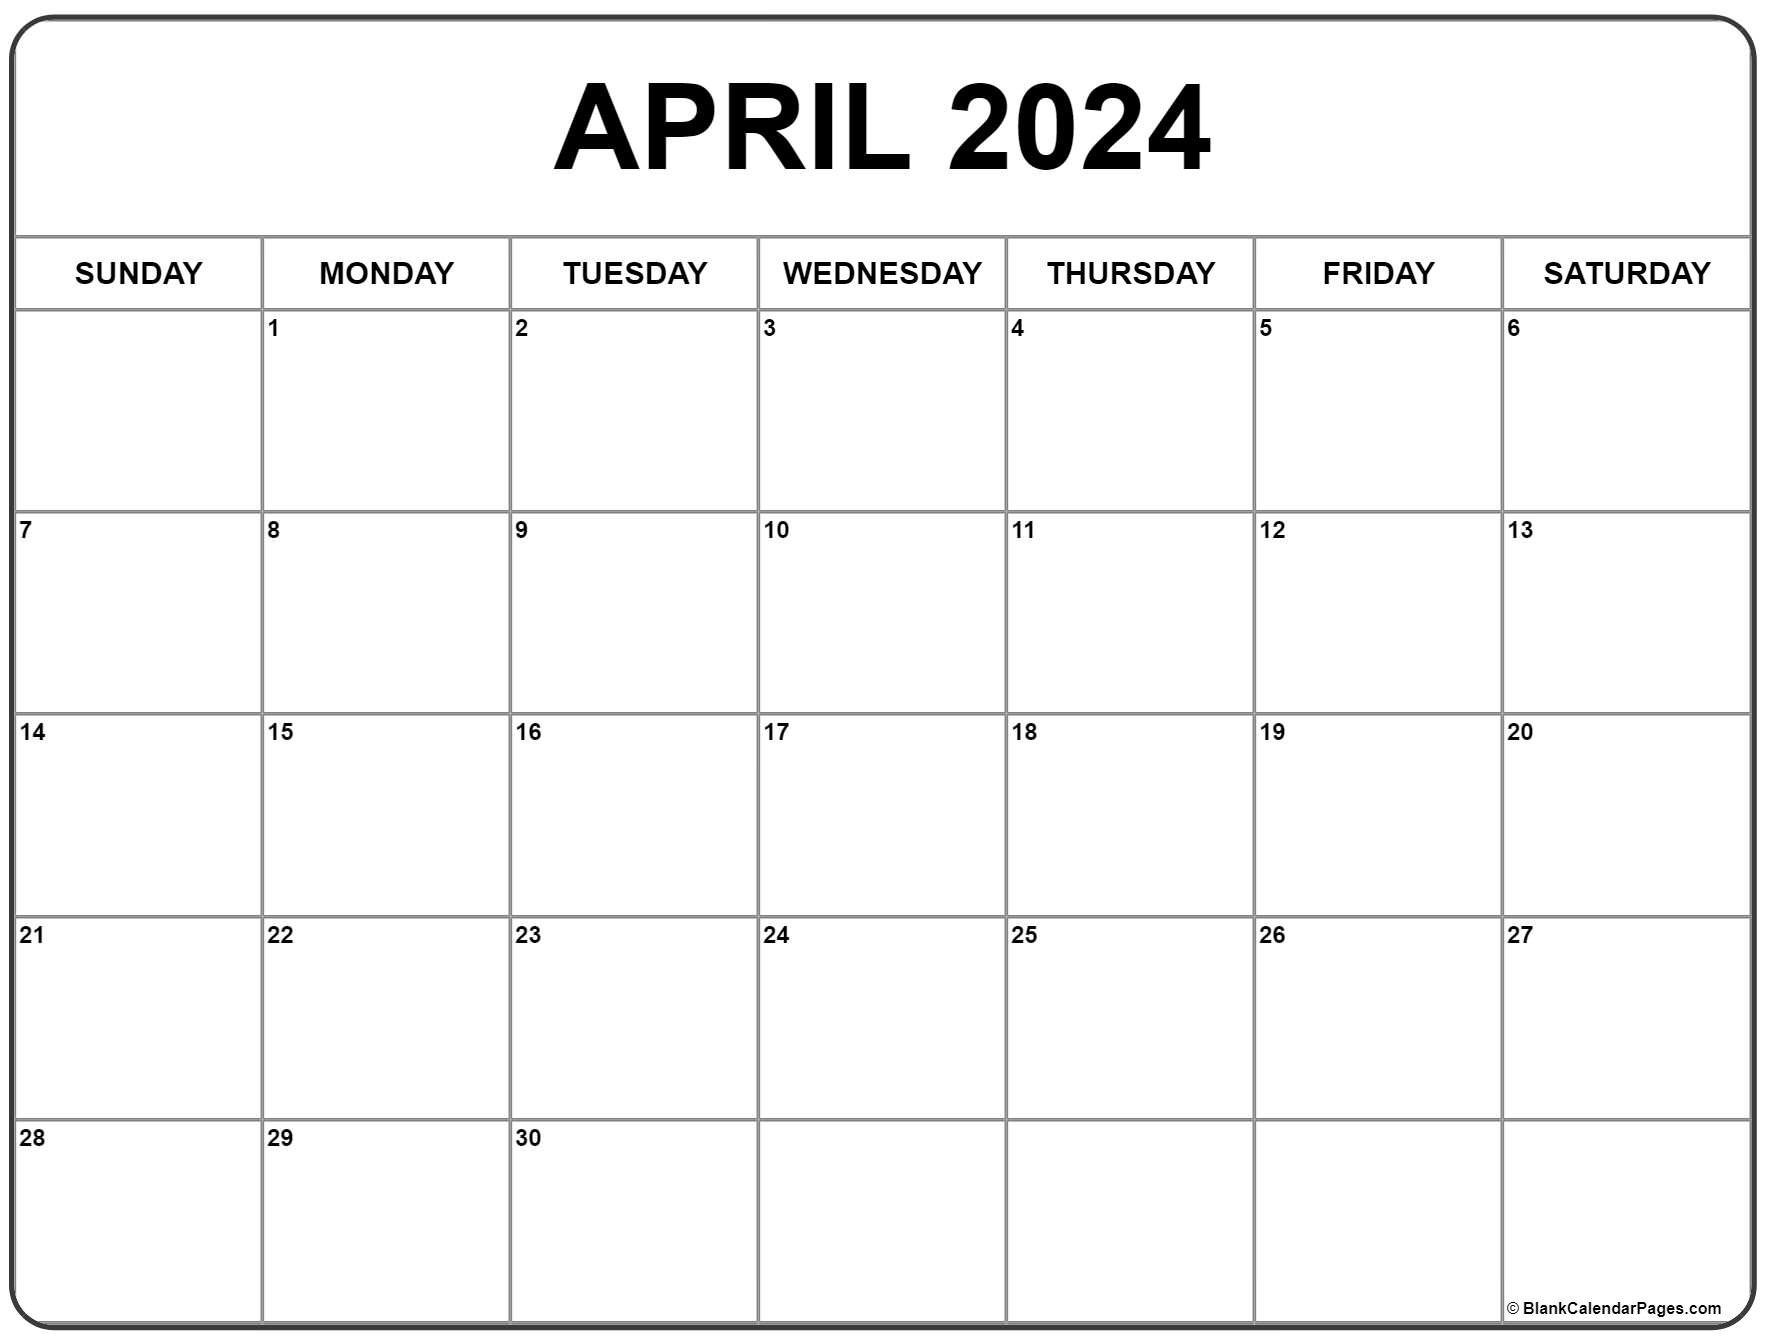 April 2024 Calendar | Free Printable Calendar for Printable Monthly Calendar 2024 April